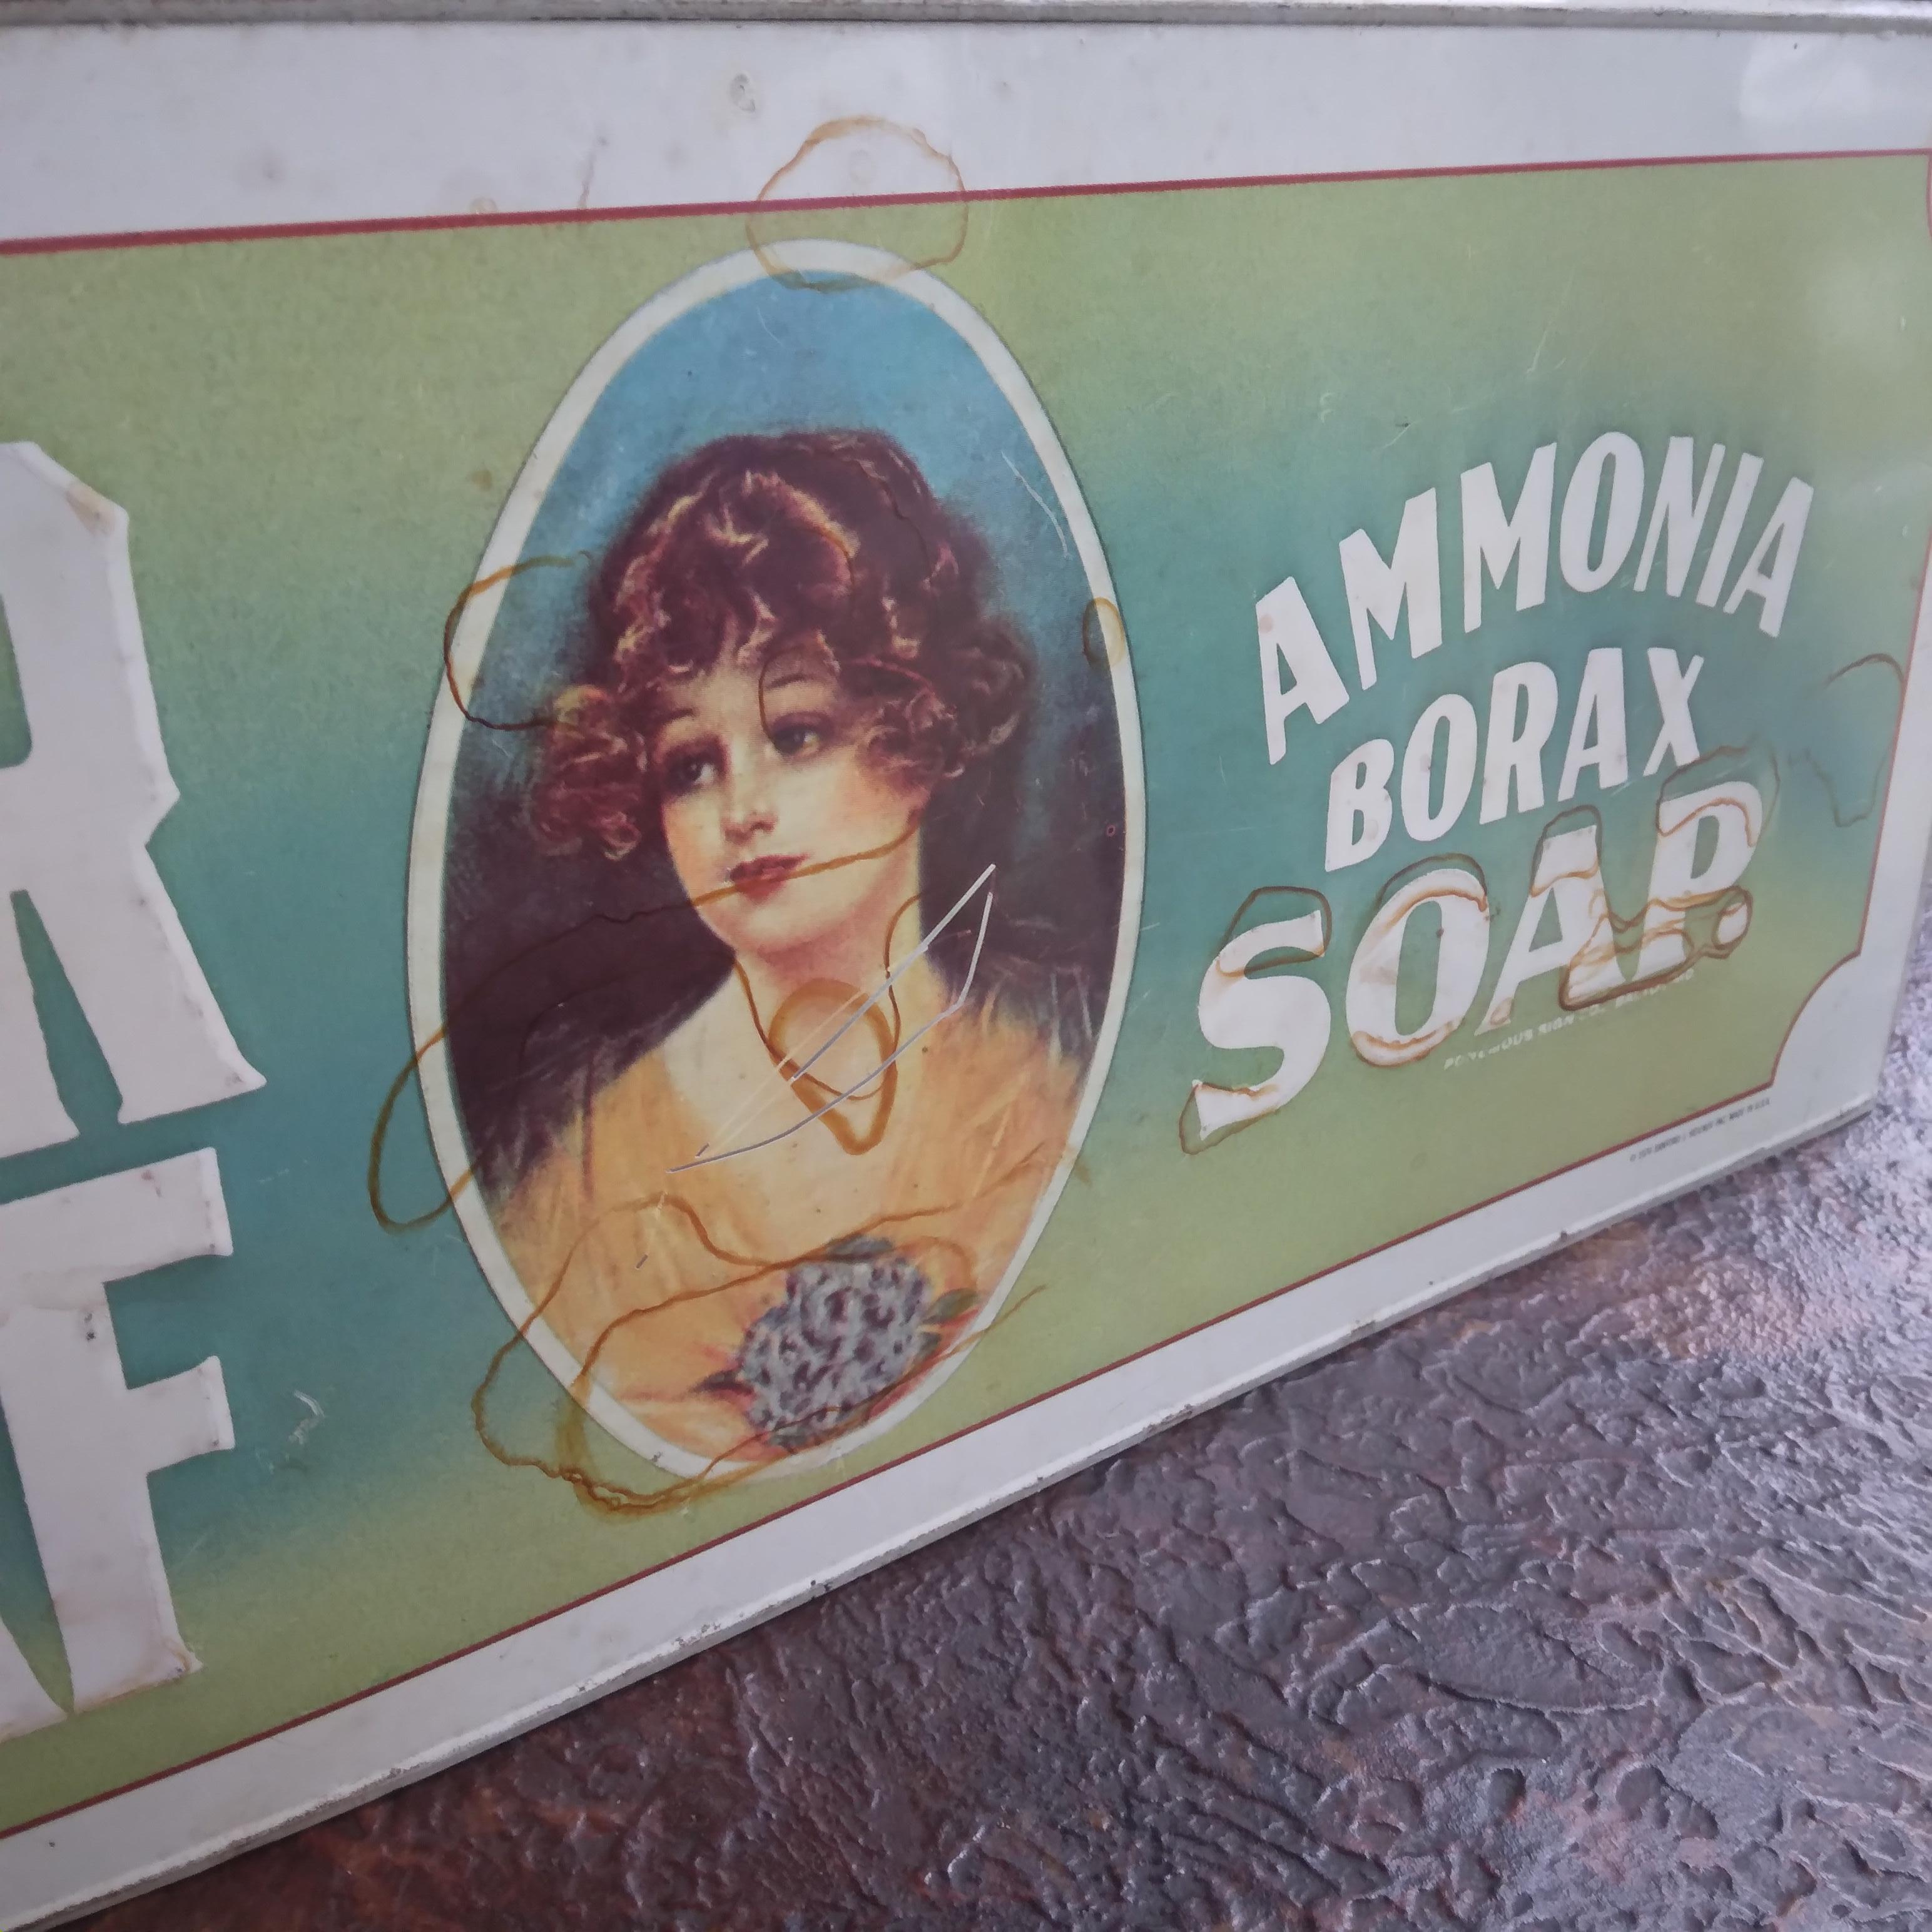 Post-Modern Vintage Metal Sign Clover Leaf Ammonia Borax Soap - 1974 For Sale